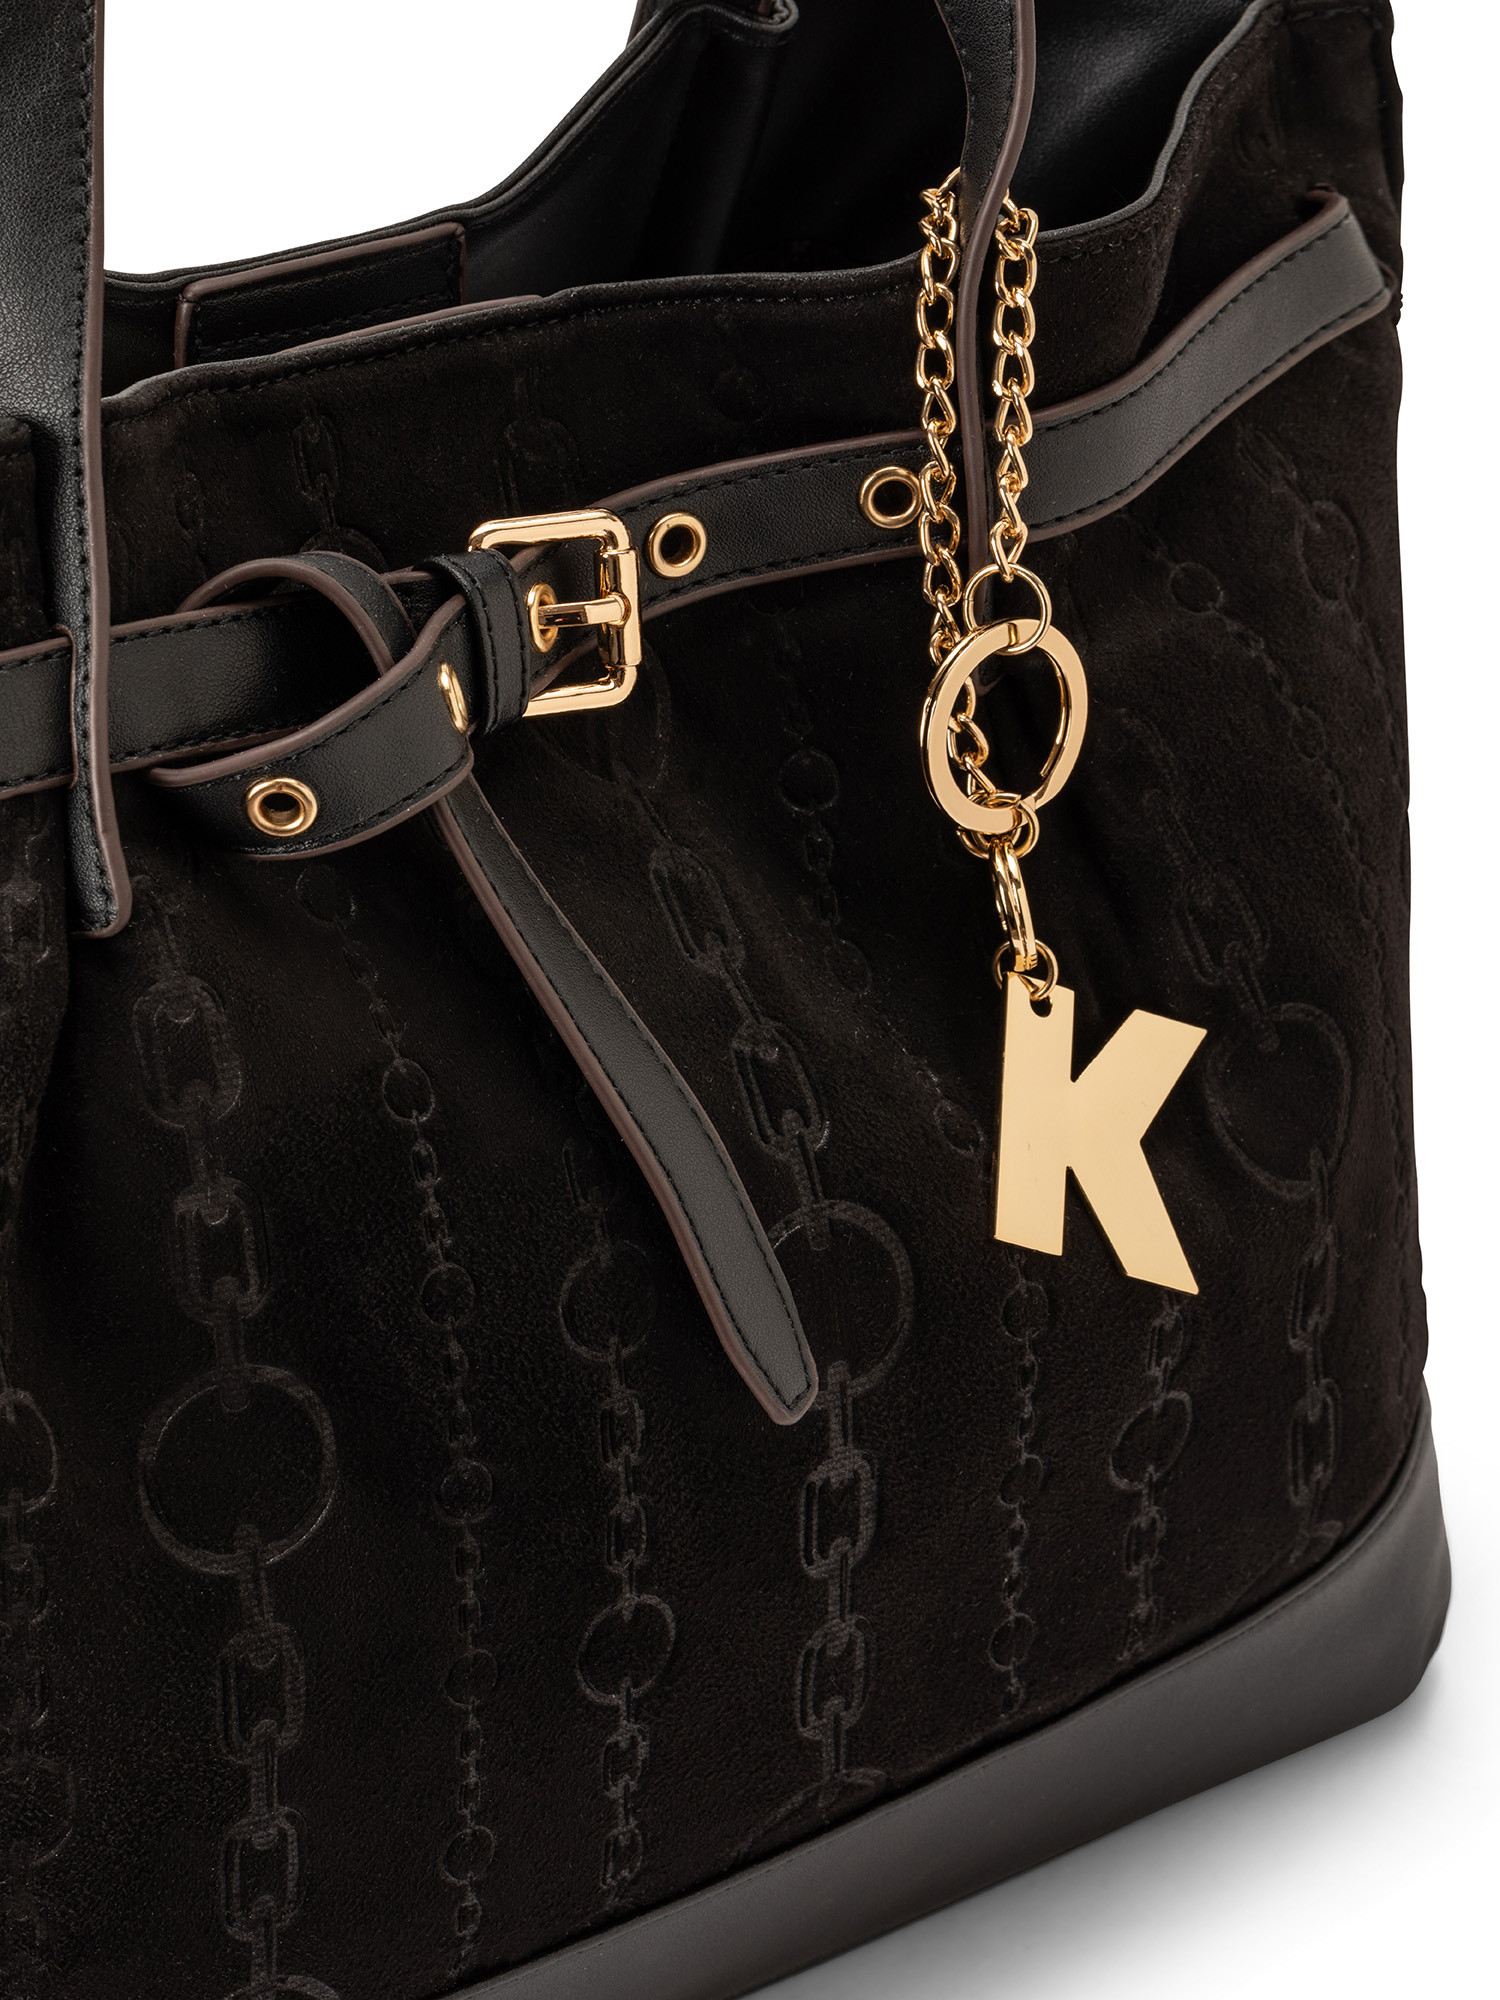 Koan - Shopping bag with print, Black, large image number 2